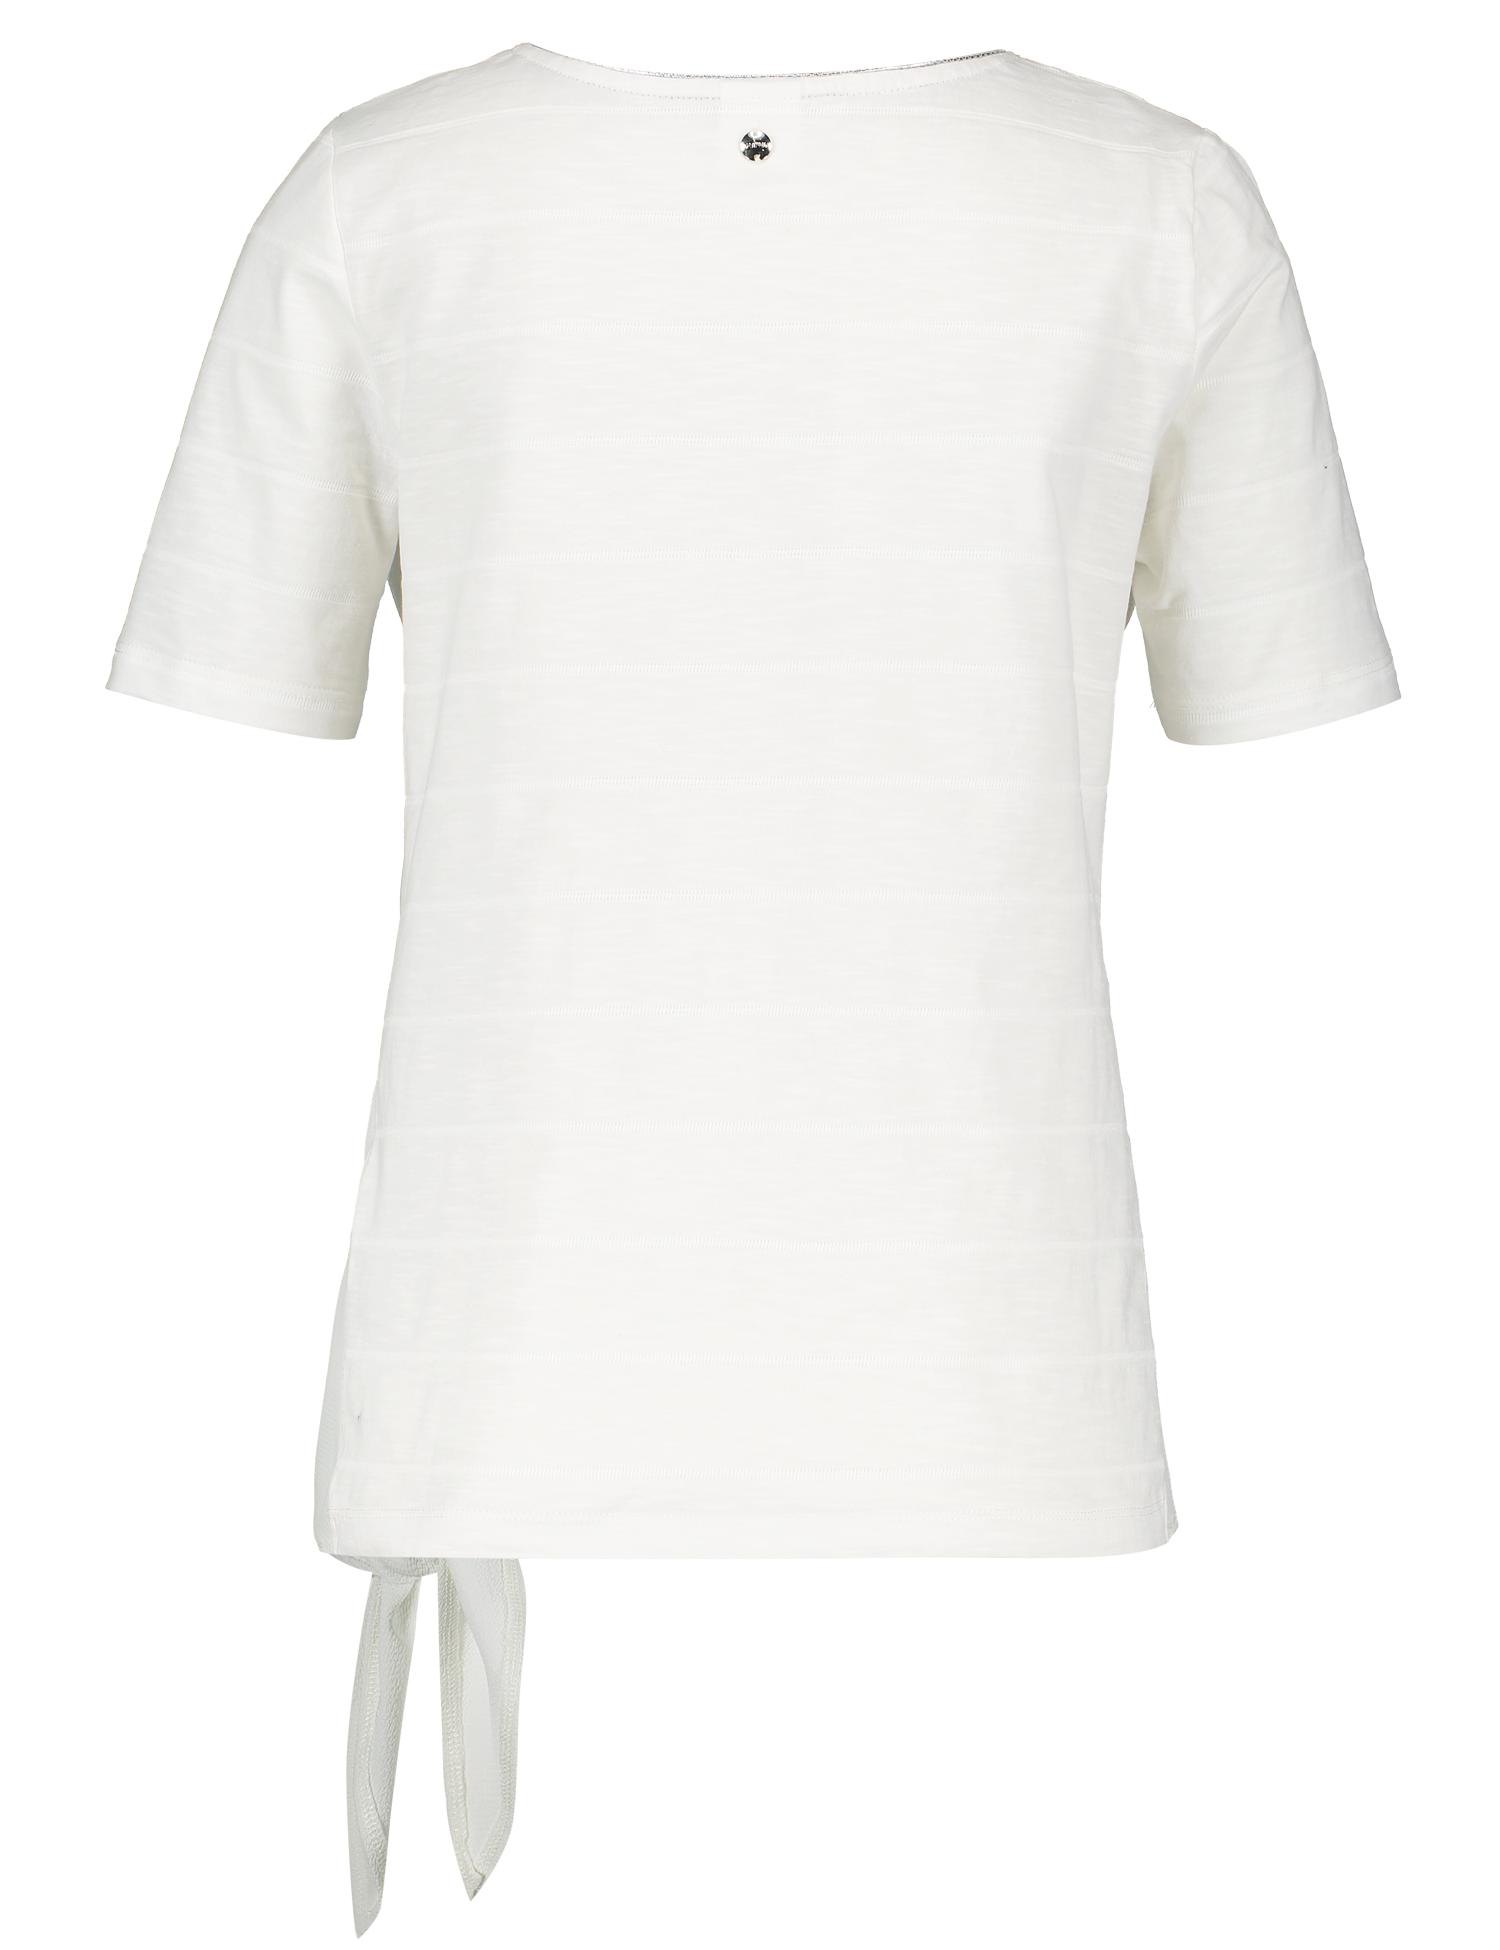 TAIFUN T-Shirt mit Knoten am Saum in Weiß 